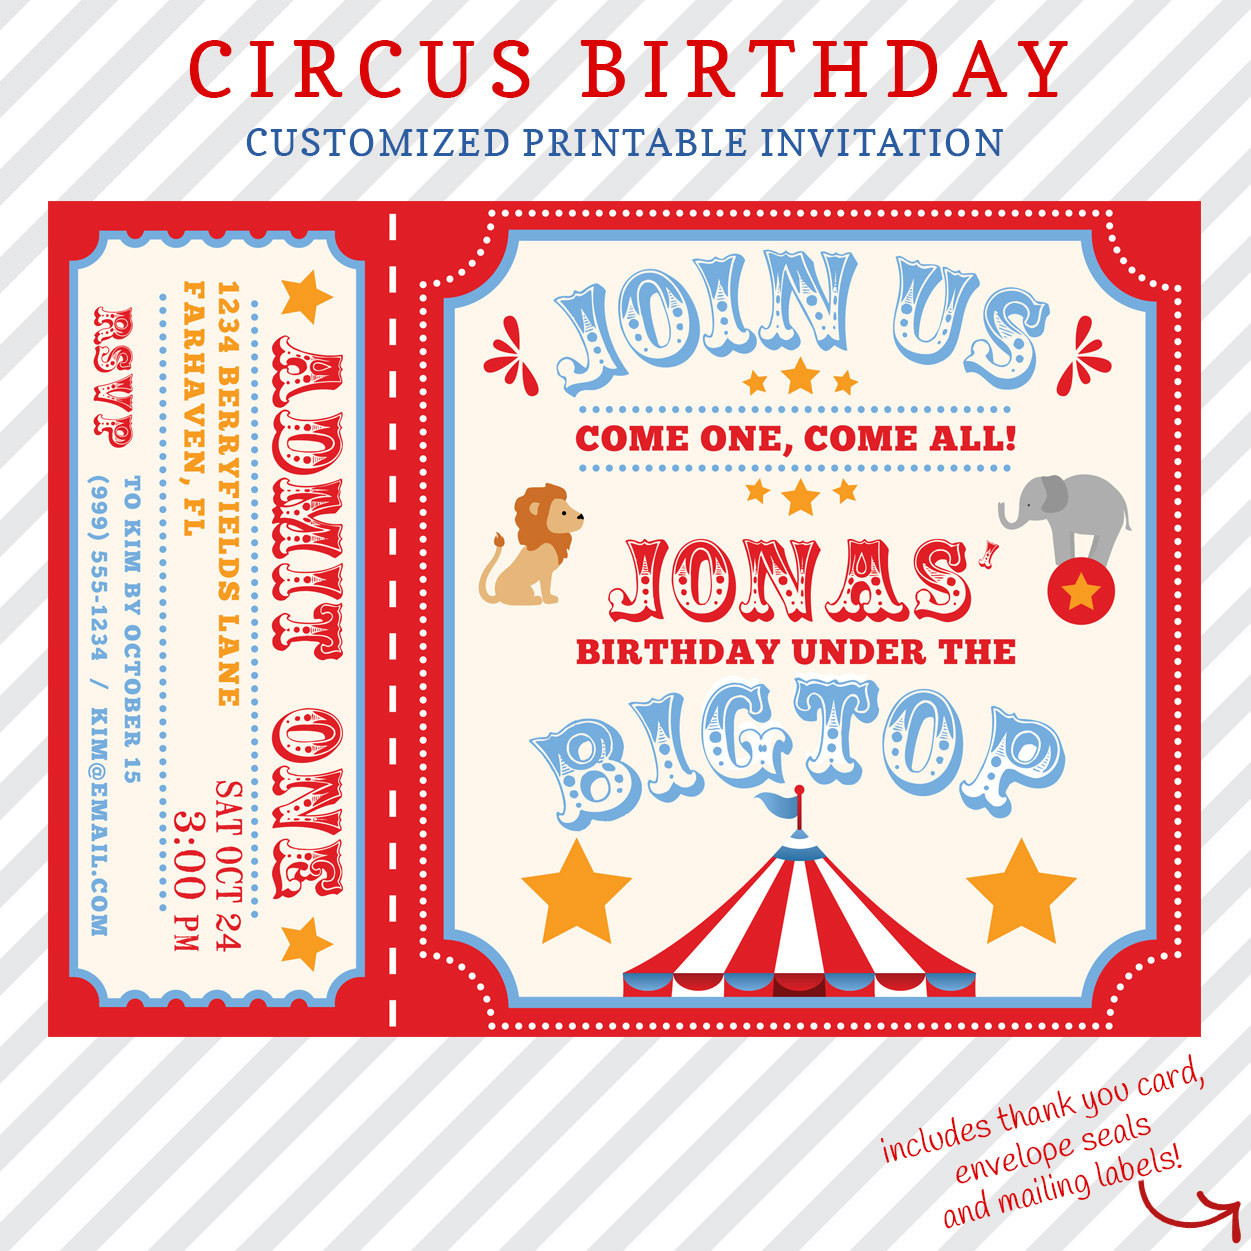 Carnival Birthday Party Invitations
 Circus Birthday Invitation Printable custom invitation with